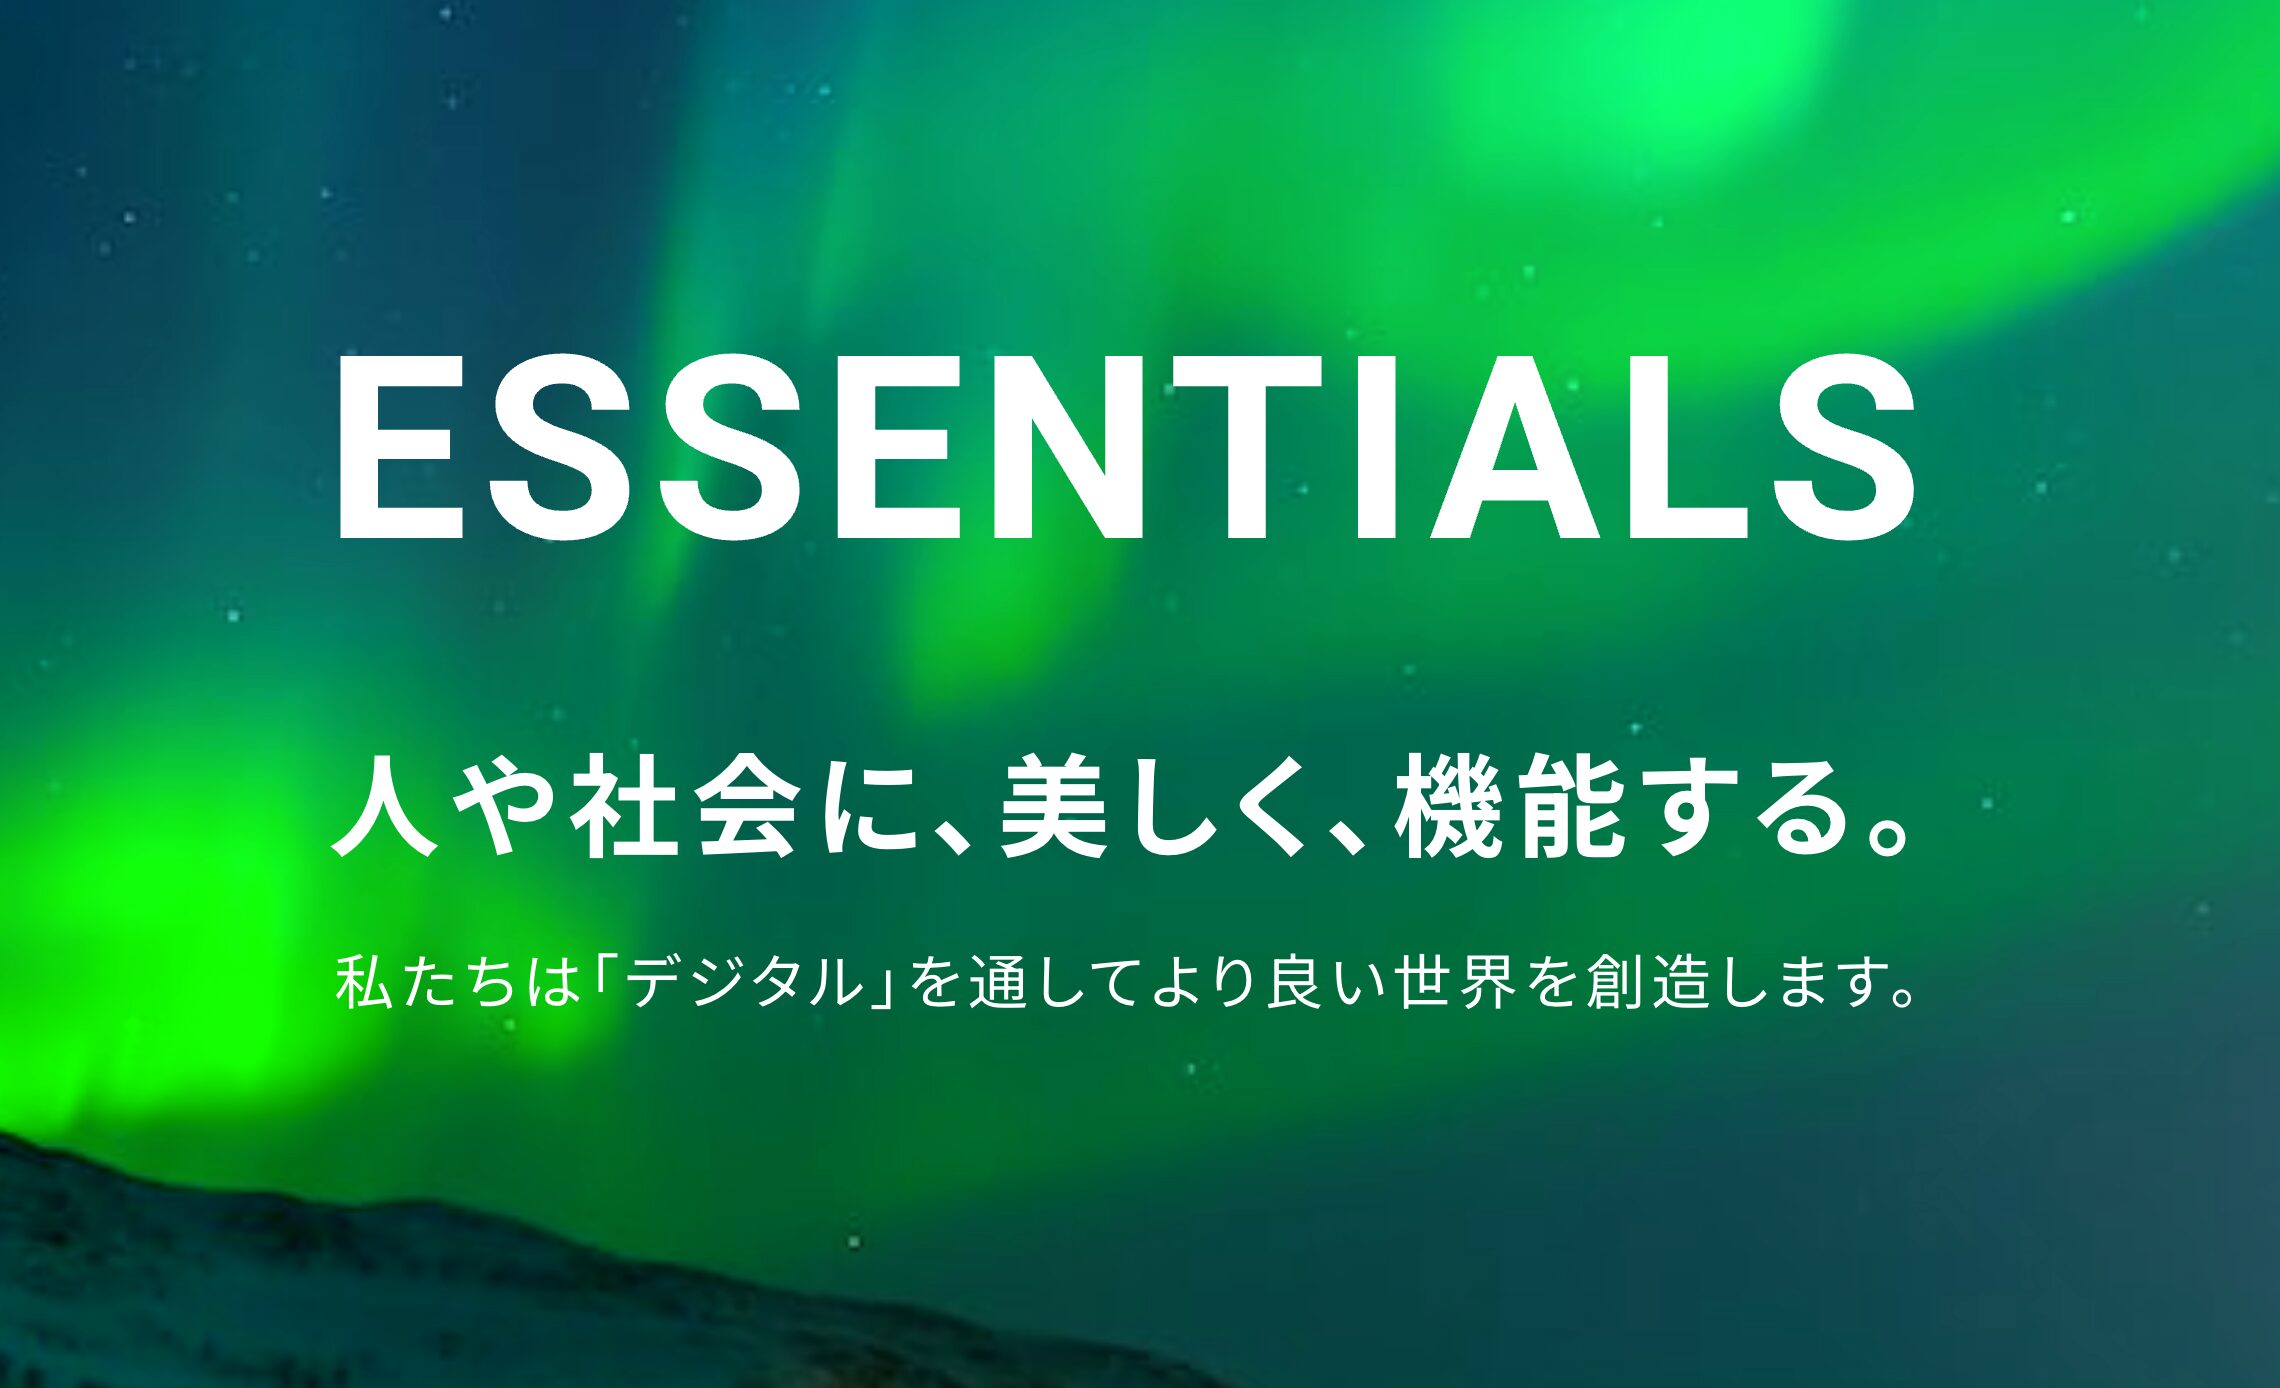 株式会社 Essentials